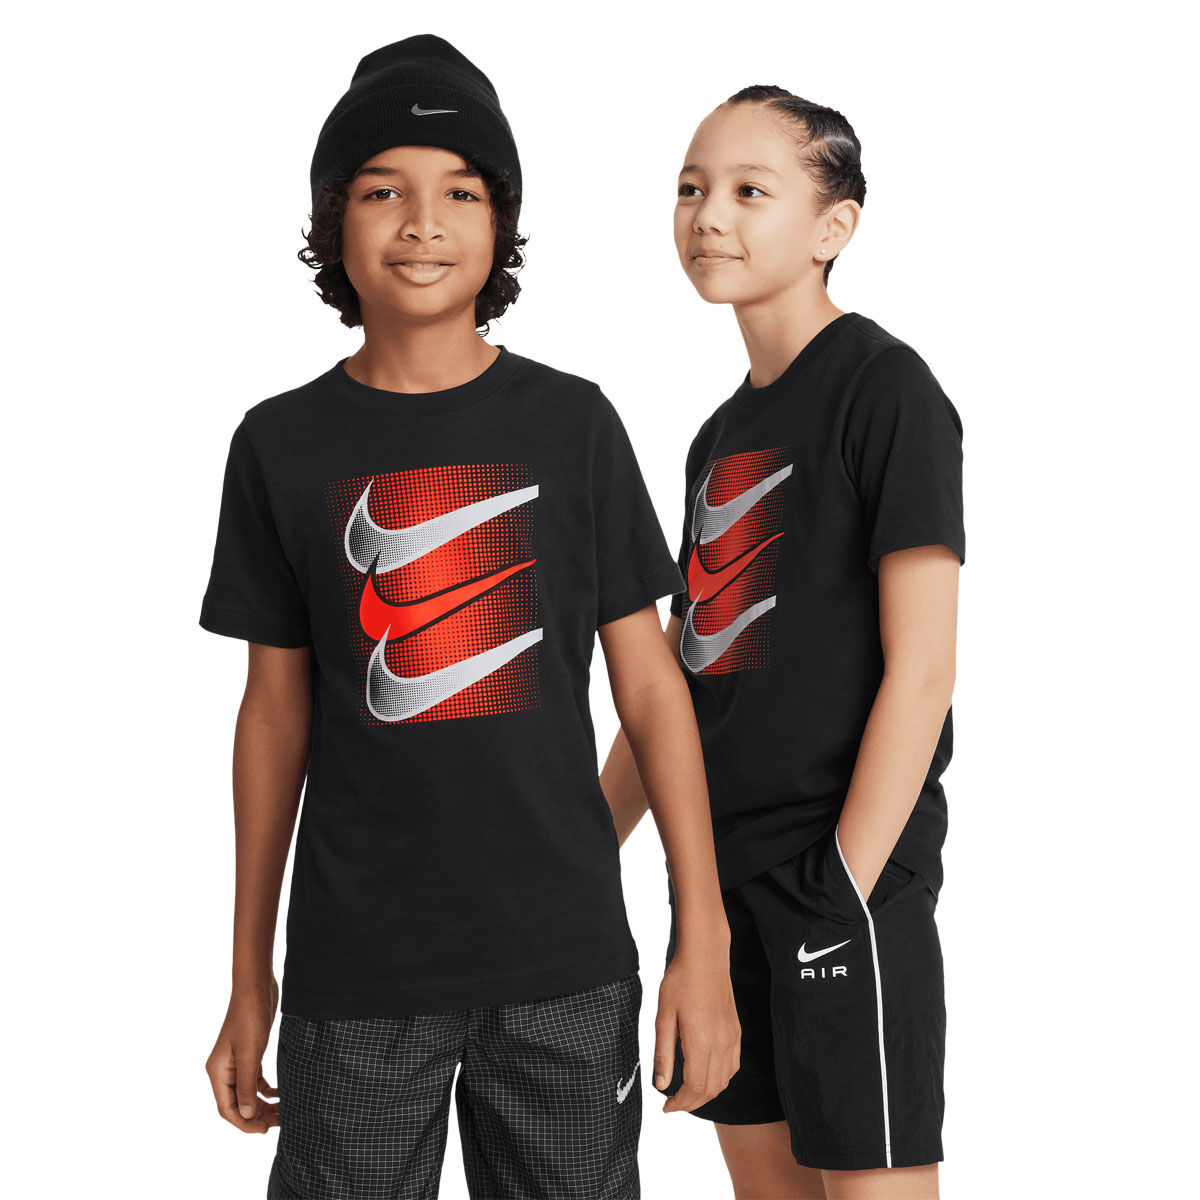 Nike | Buy Nike Sportswear, Shoes, Clothing & more | rebel